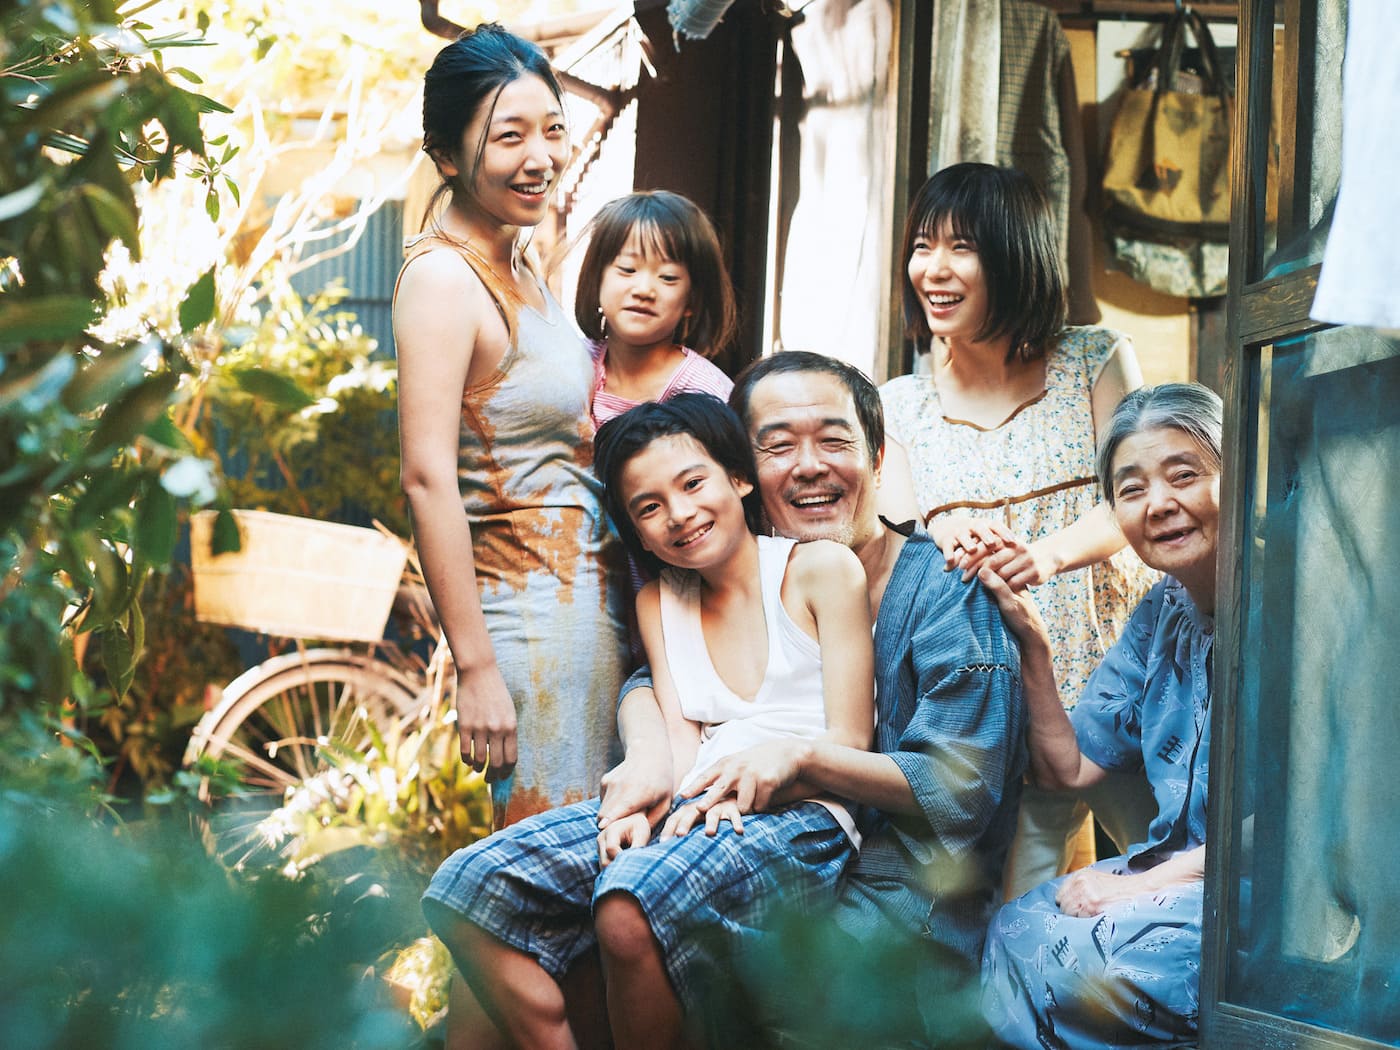 Photograph showing the Shibata family at home smiling